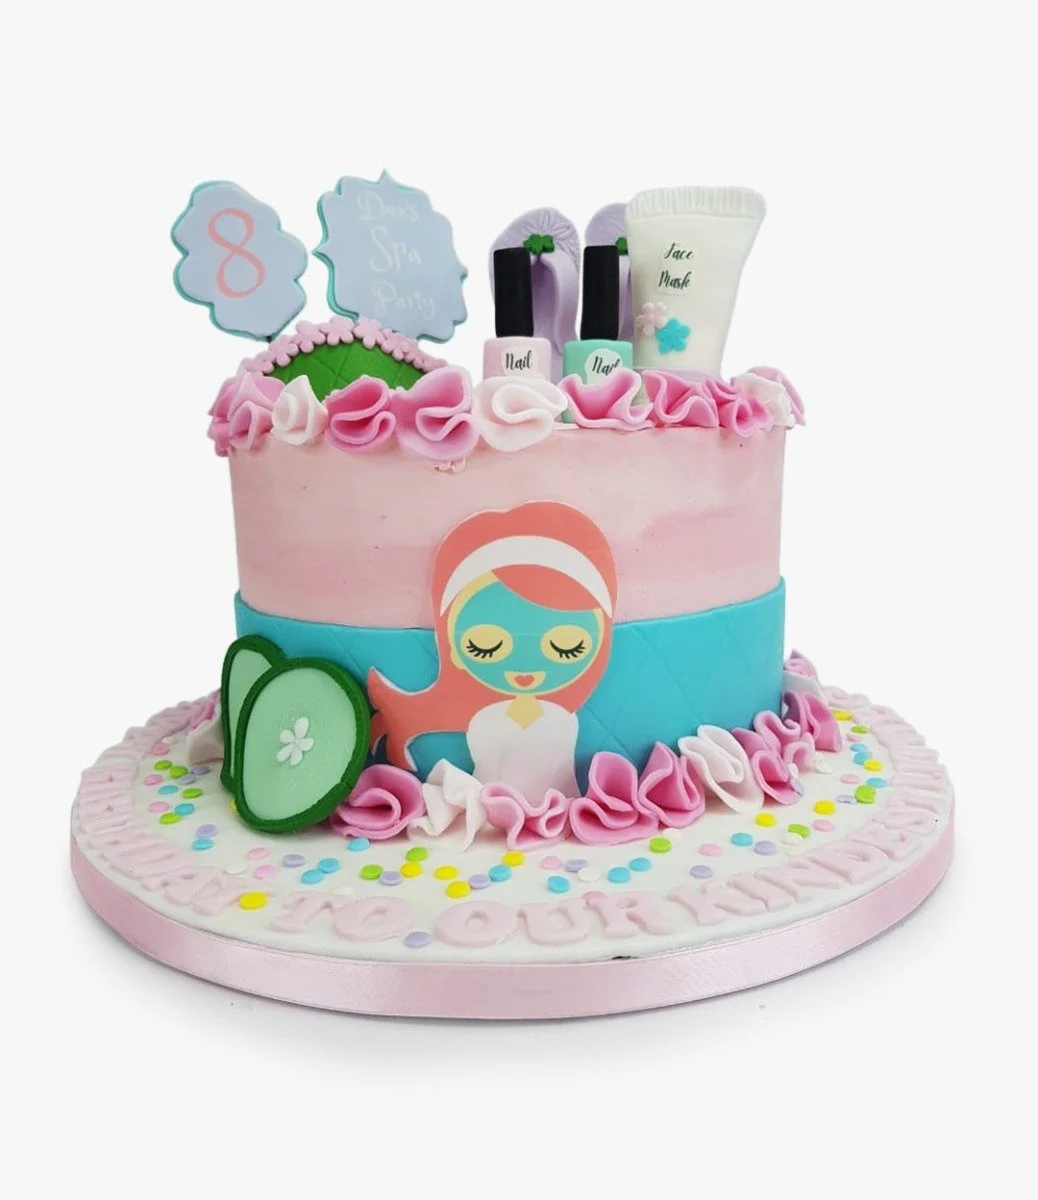 Spa Day Cake By Cake Social